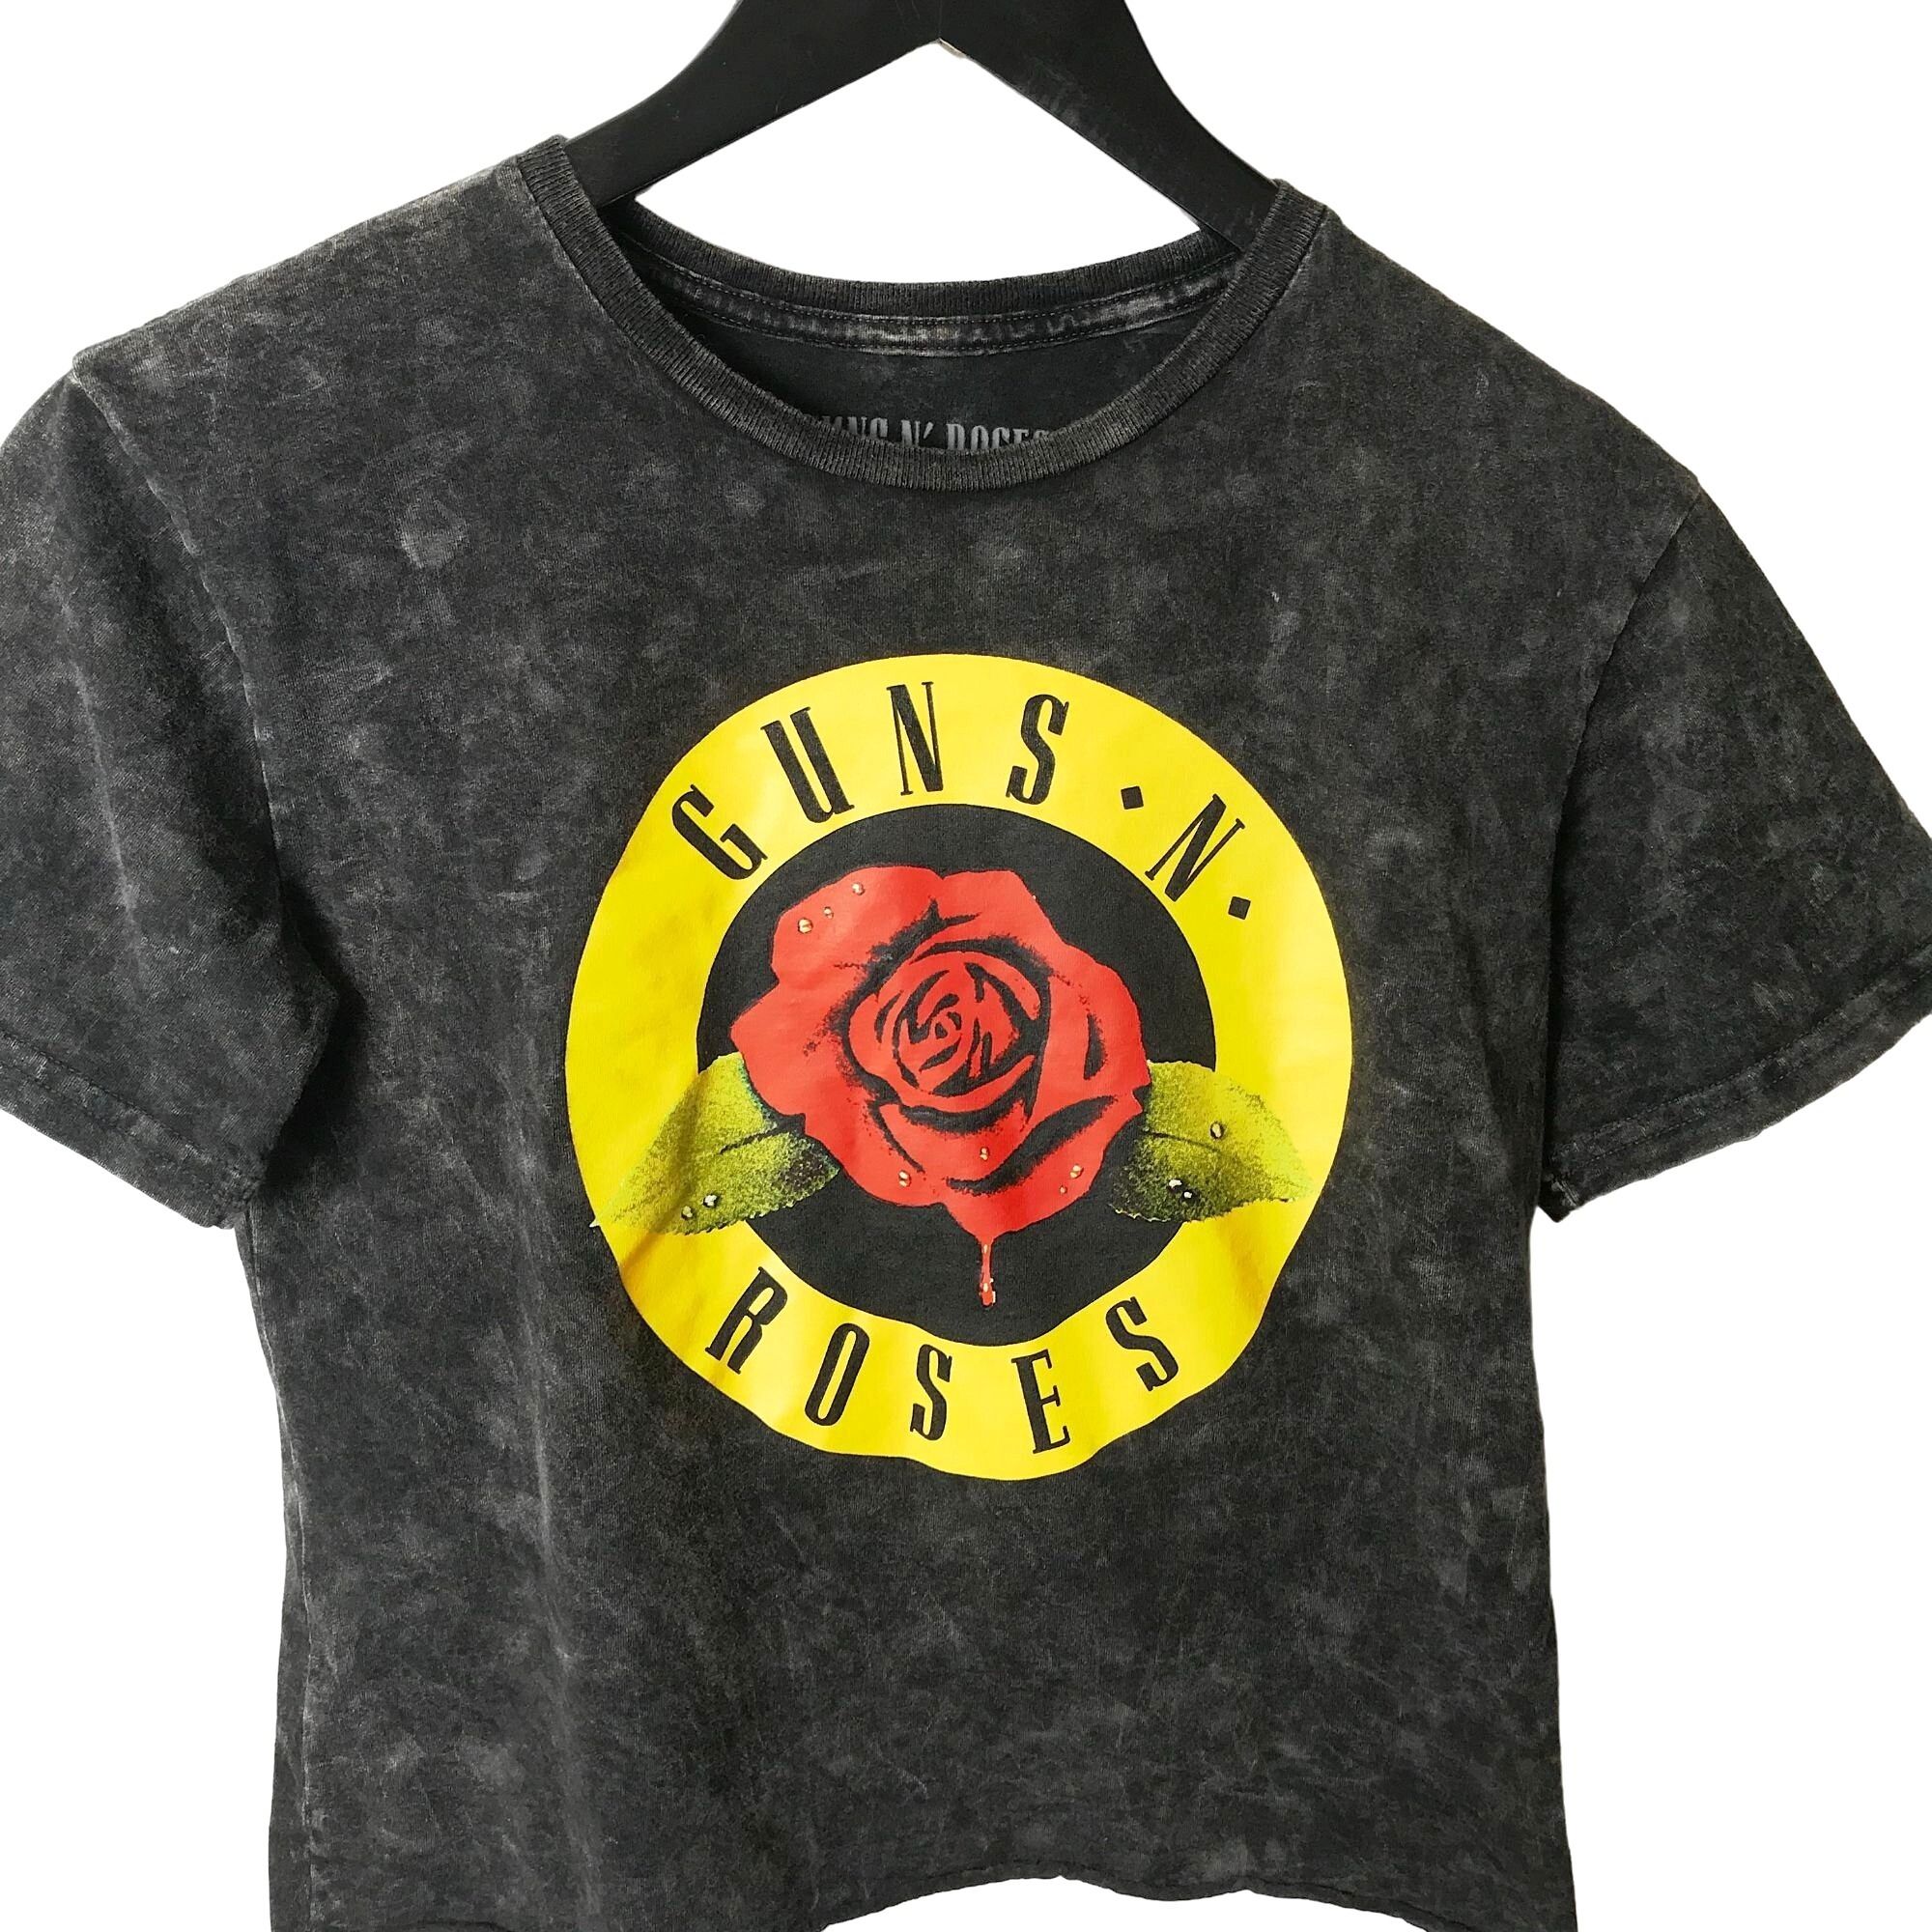 Urban Outfitters Guns N' Roses T Shirt Womens Black Medium Flower Raw Hem M Size M / US 6-8 / IT 42-44 - 2 Preview